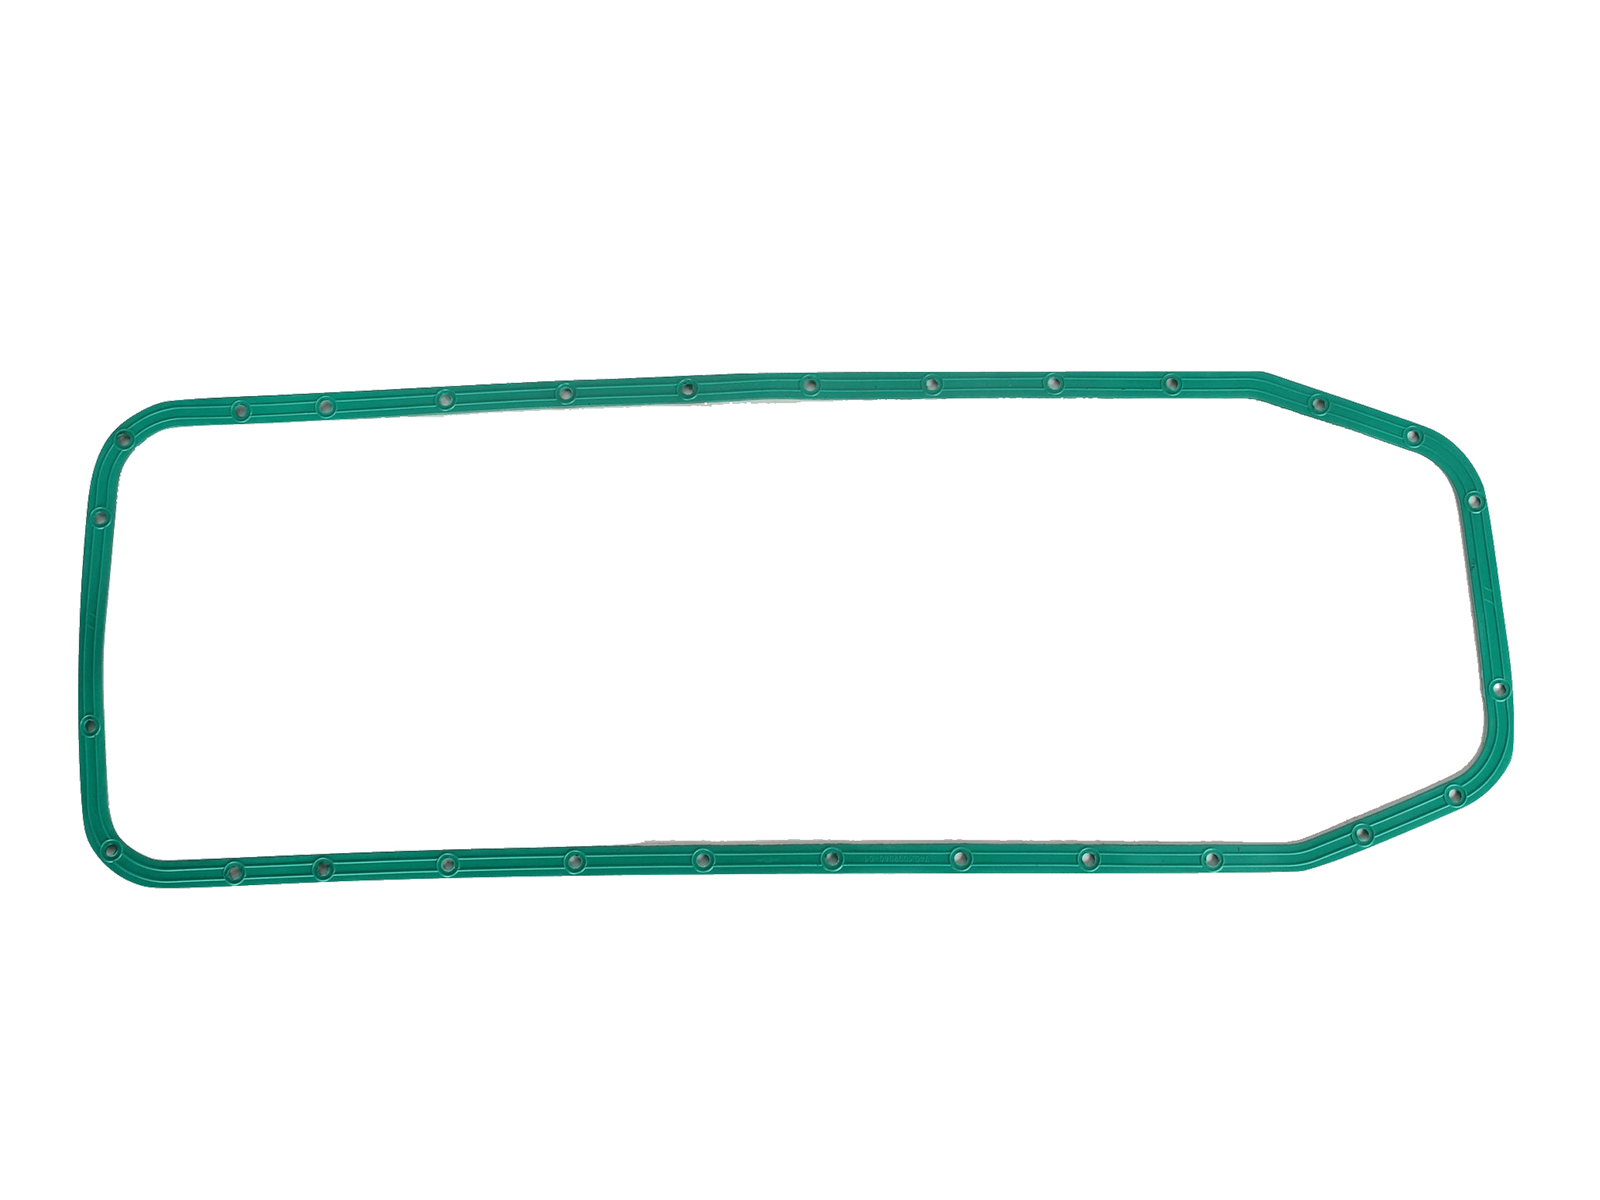 Прокладка КАМАЗ картера масляного МБС зеленая с металлическими вставками АВТОРЕСУРС фотография №1